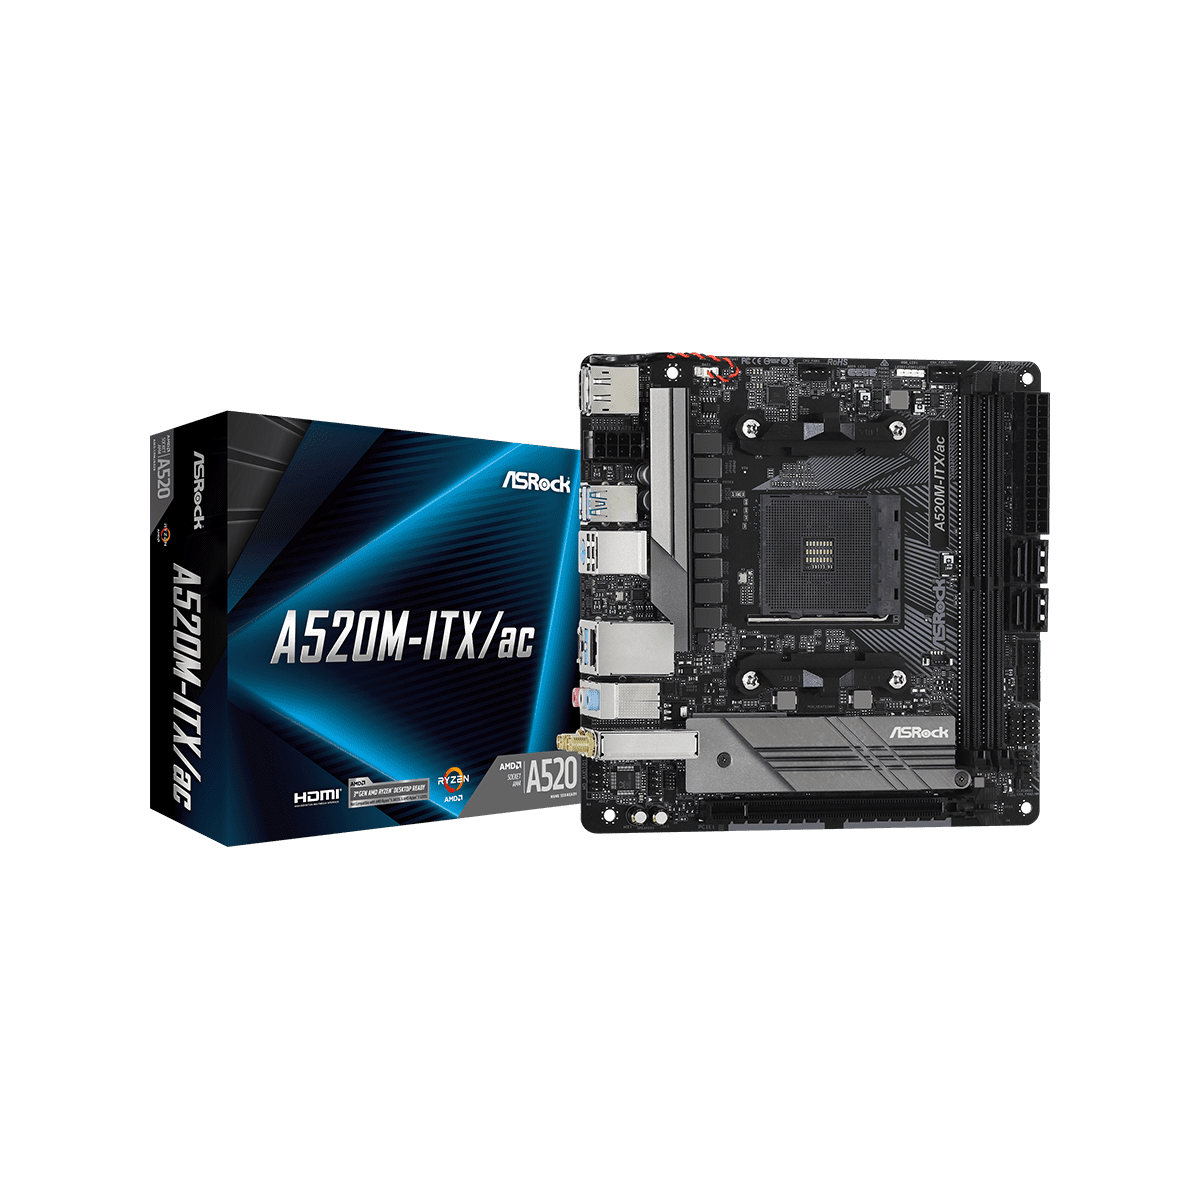 ASRock Socket AM4 AMD A520 Mini-ITX マザーボード A520M-ITX/ac